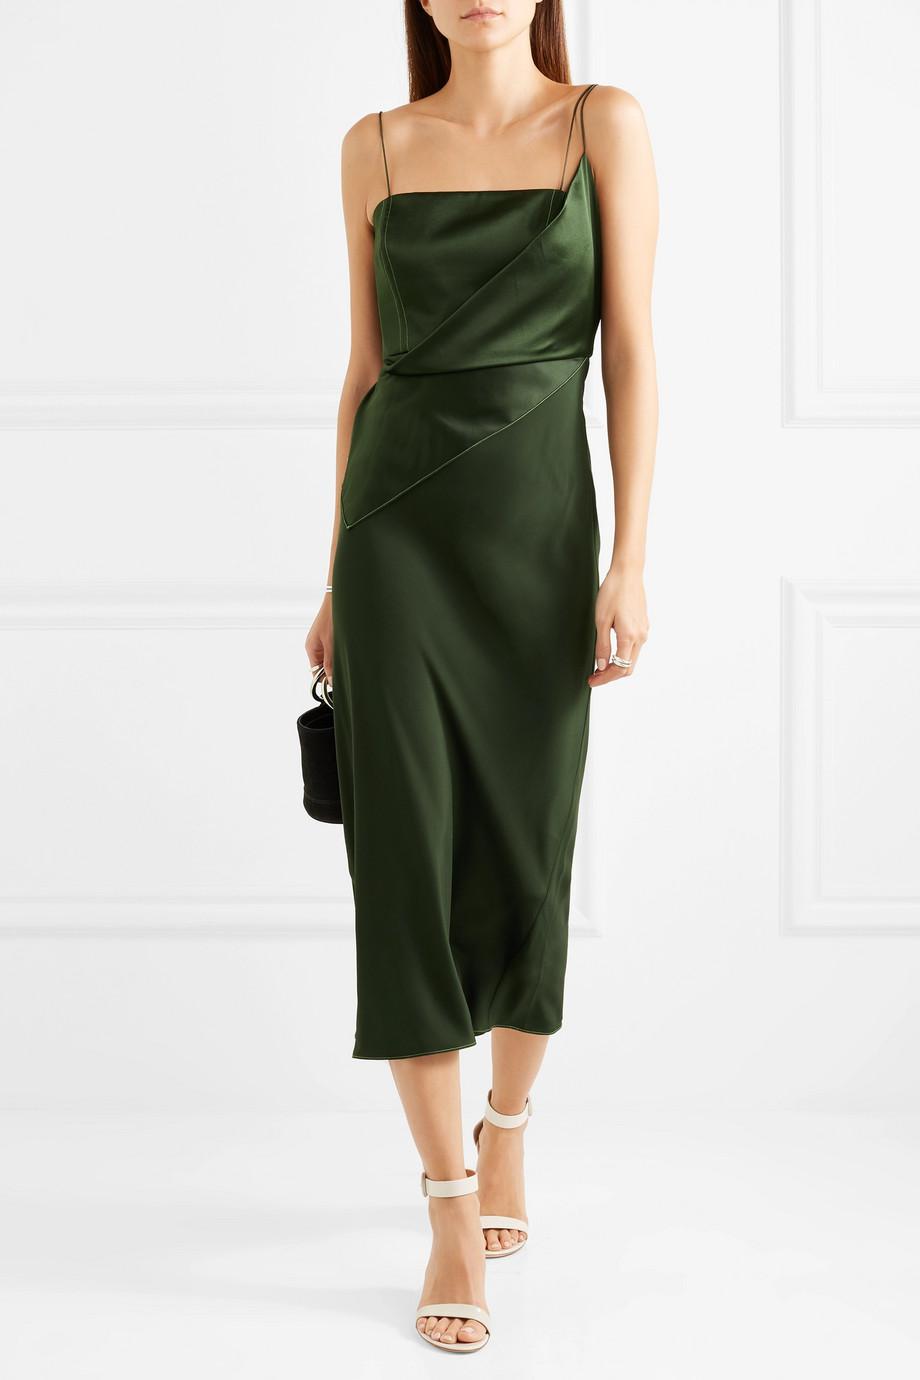 Lyst - Topshop Unique Silk-satin Midi Dress in Green